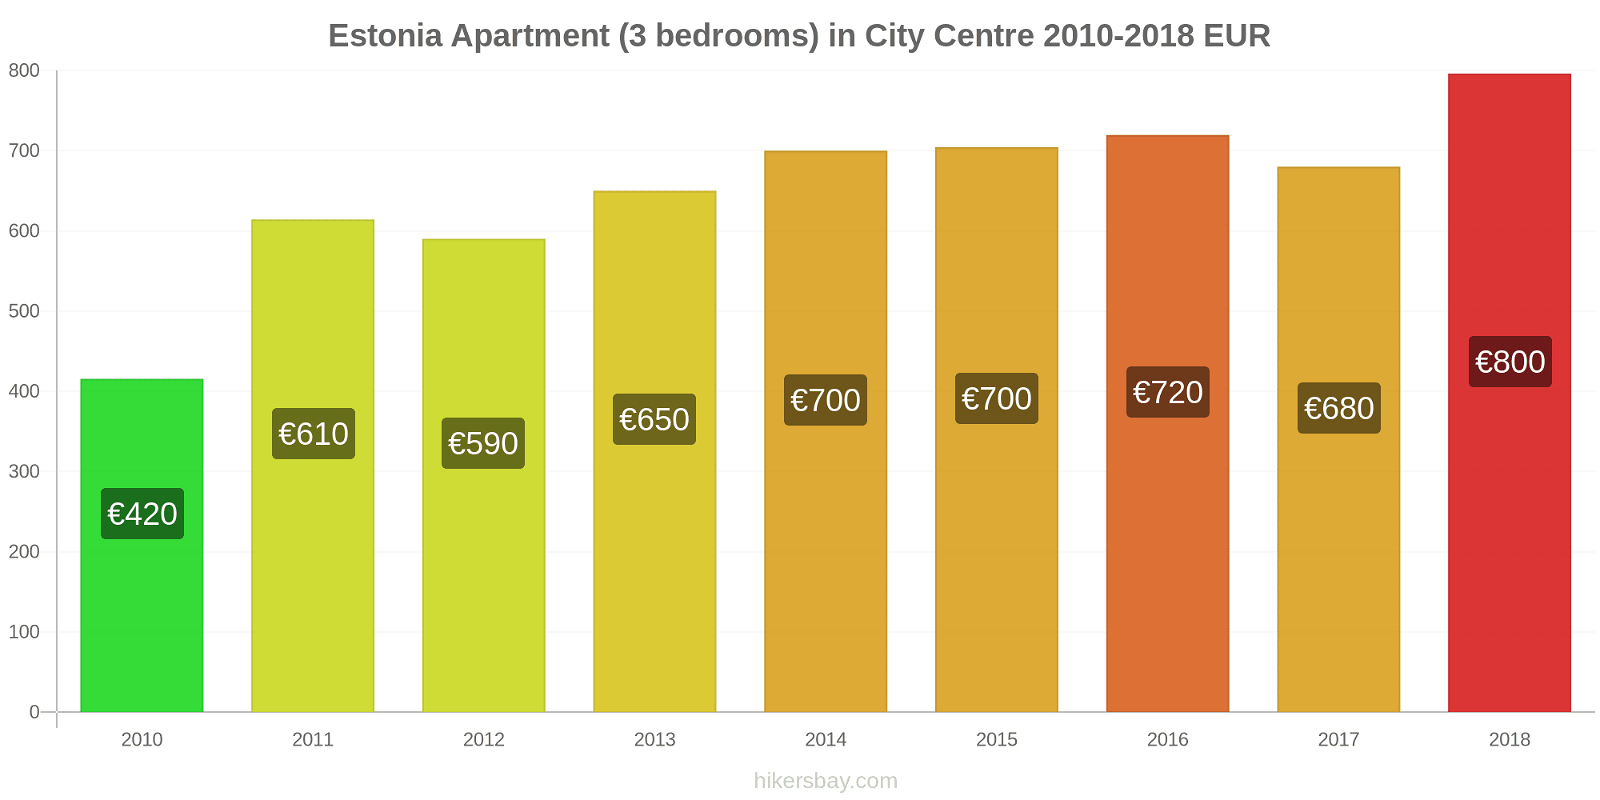 Estonia price changes Apartment (3 bedrooms) in City Centre hikersbay.com